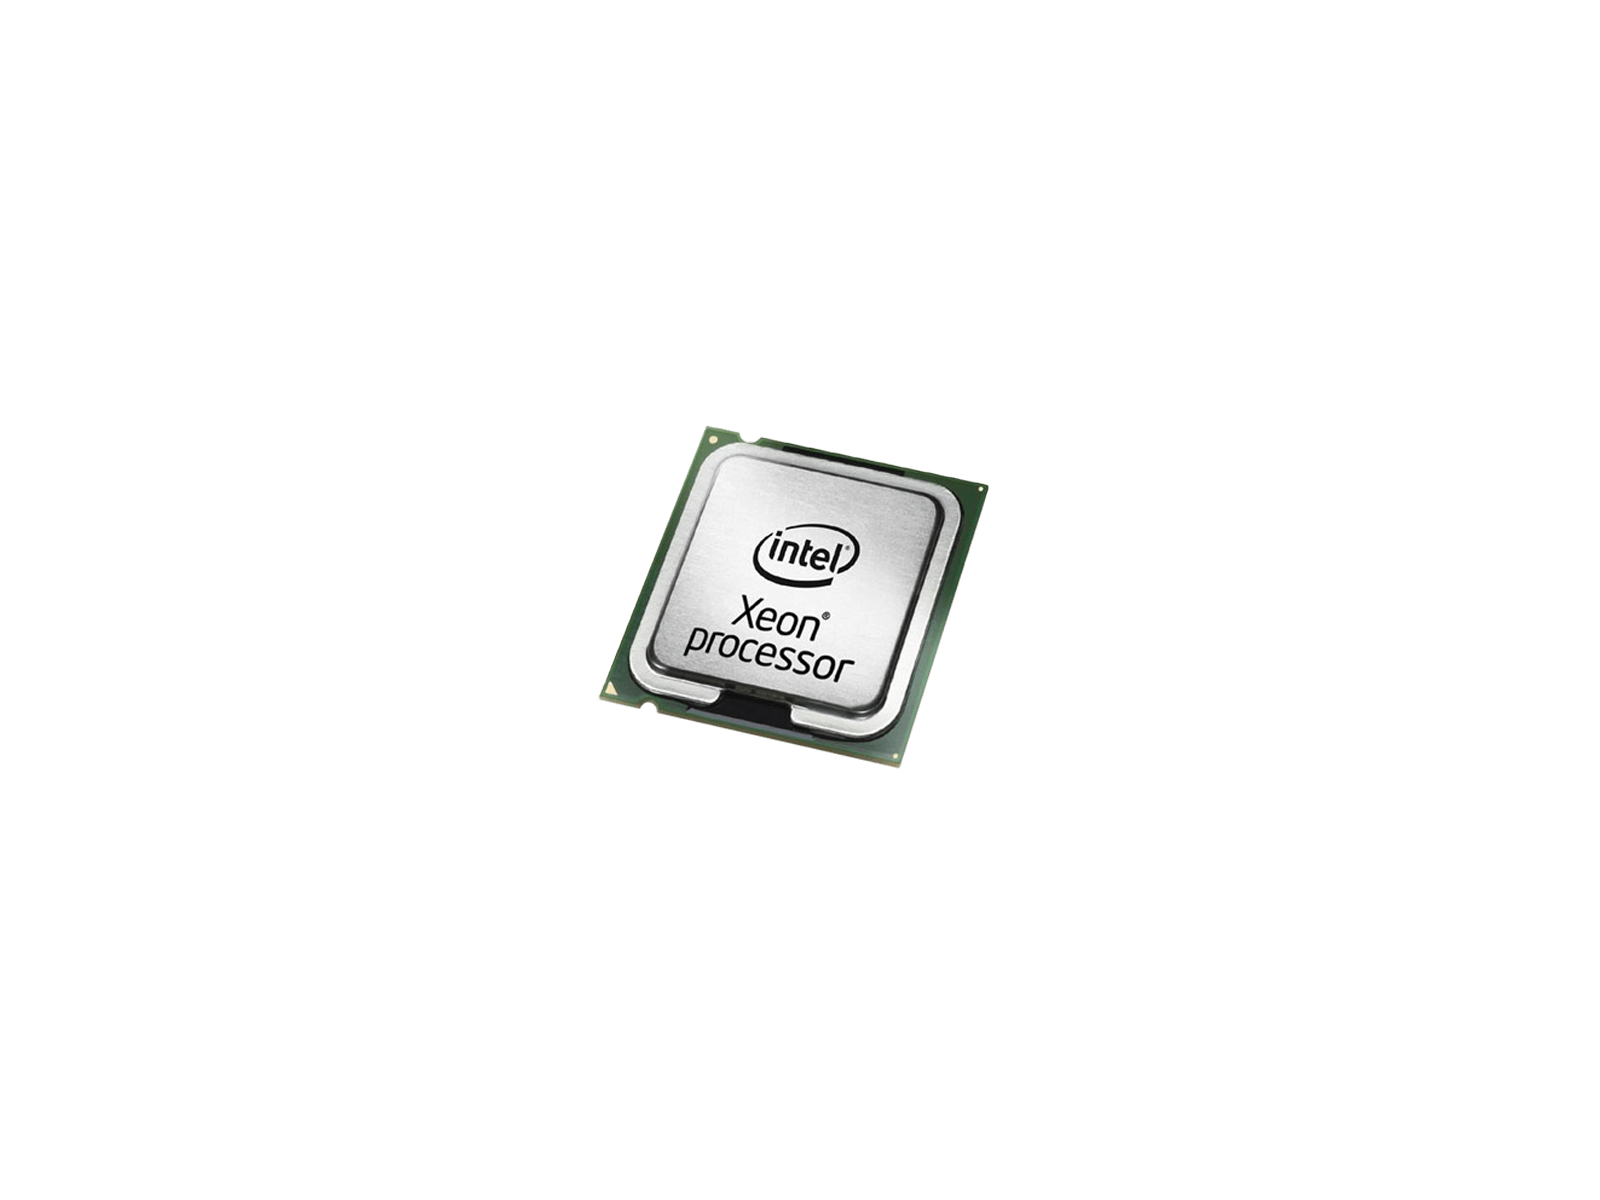 Intel Xeon E5-2640 v3 Haswell 8-Core 2.6GHz 20MB LGA2011-3 Socket 90W SR205 Processor CPU